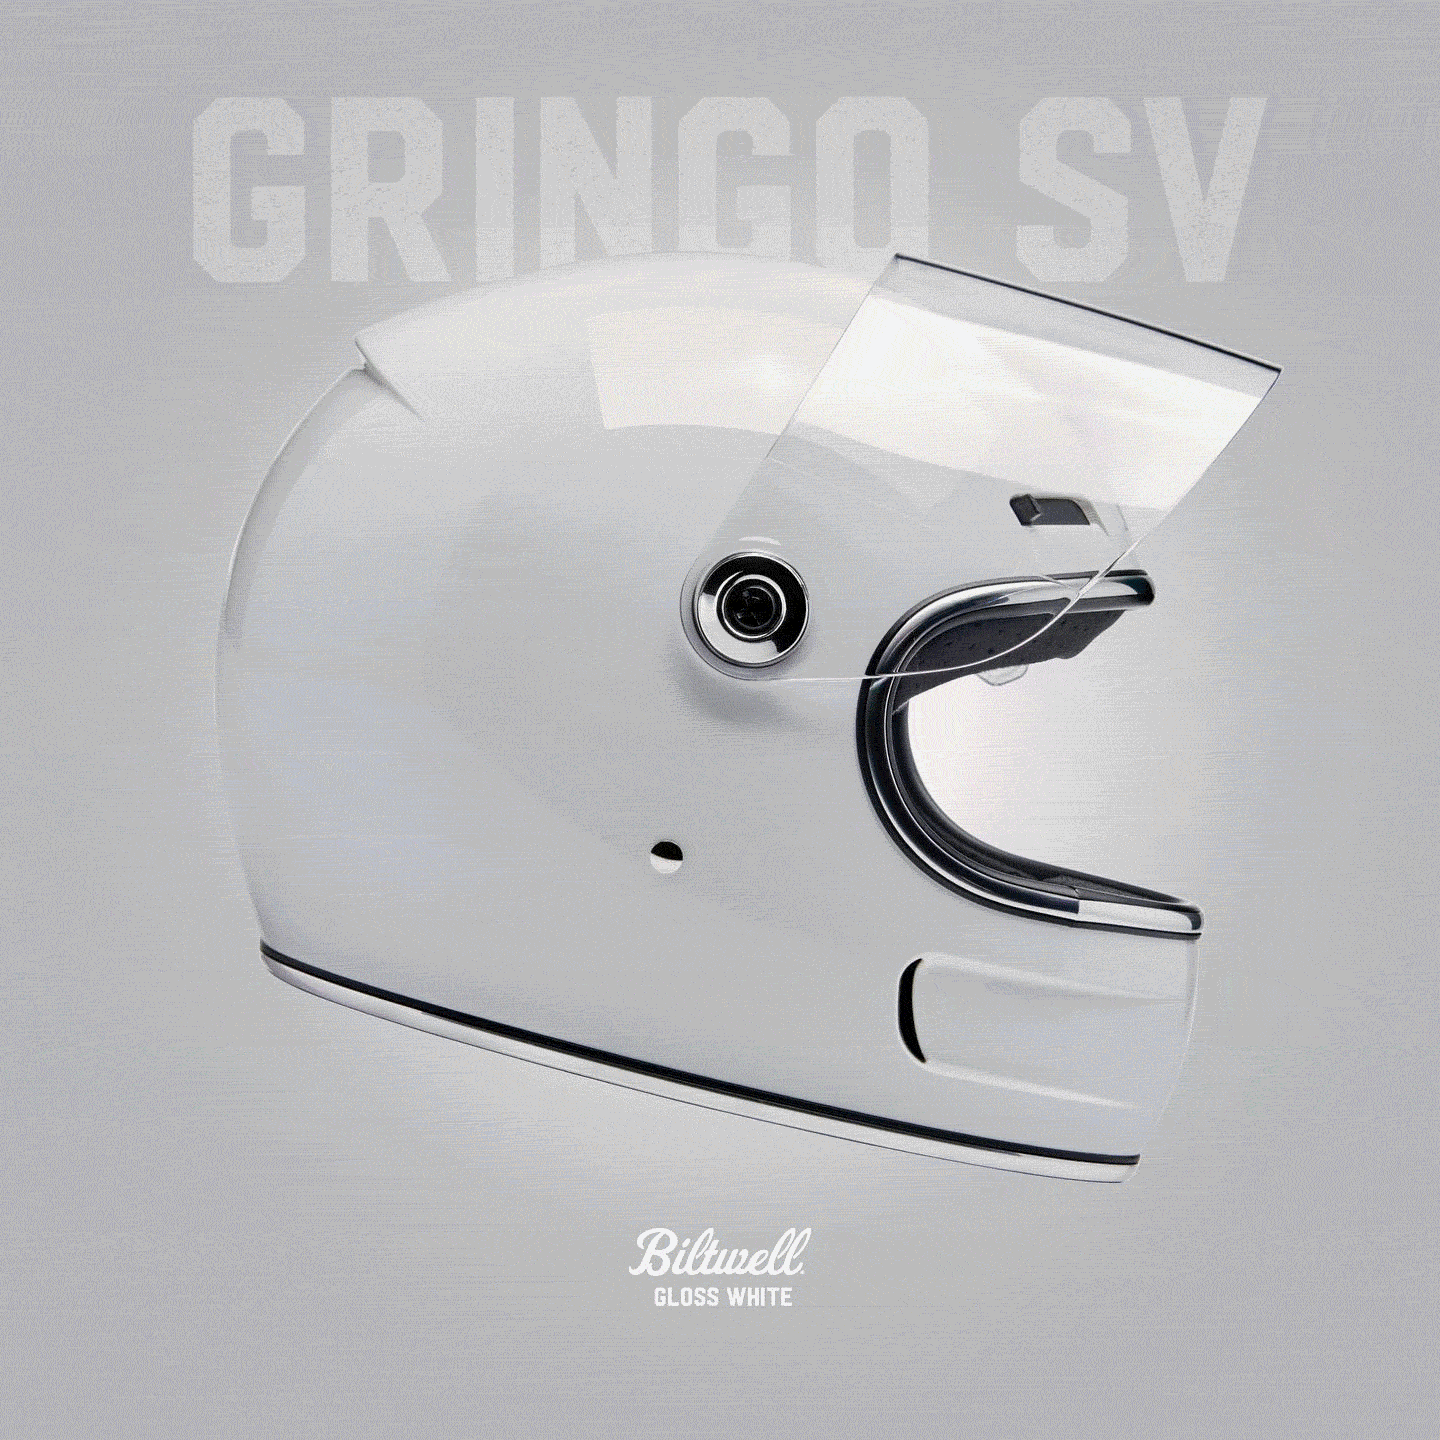 Gringo SV Helmets